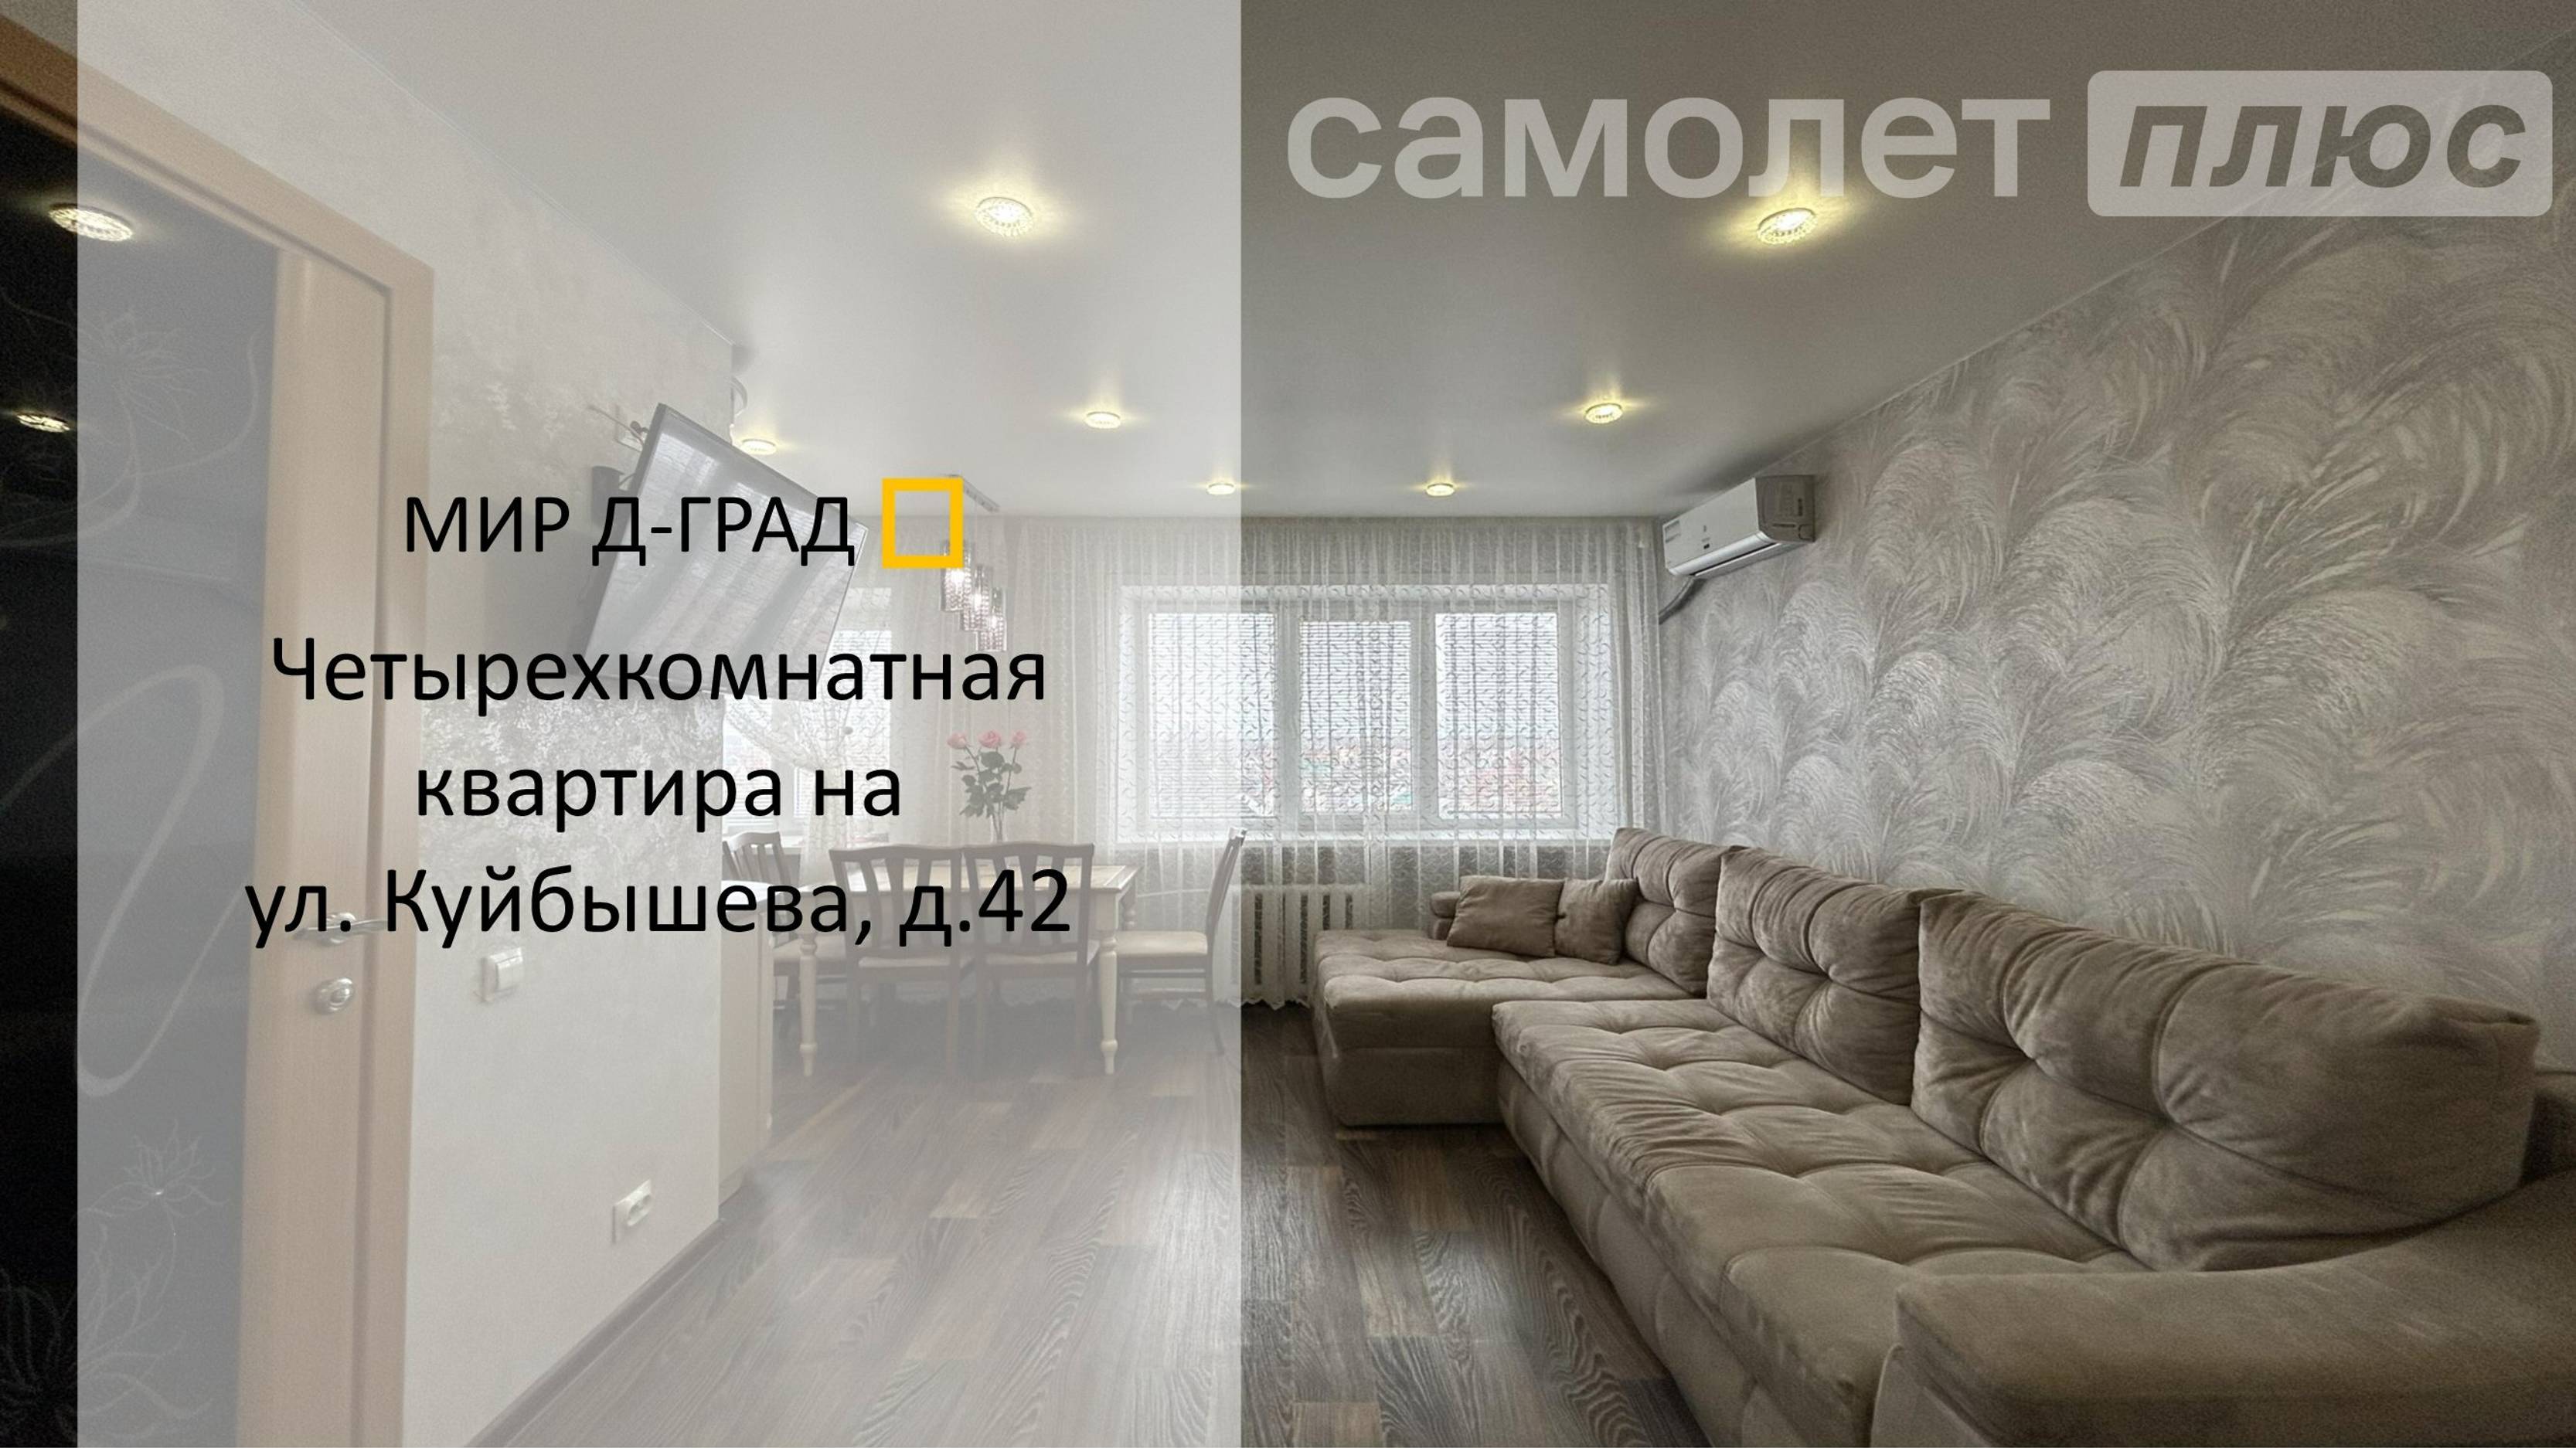 4 кмн. кв. на ул. Куйбышева, д.42, 5 этаж, 61 м², г. Димитровграда